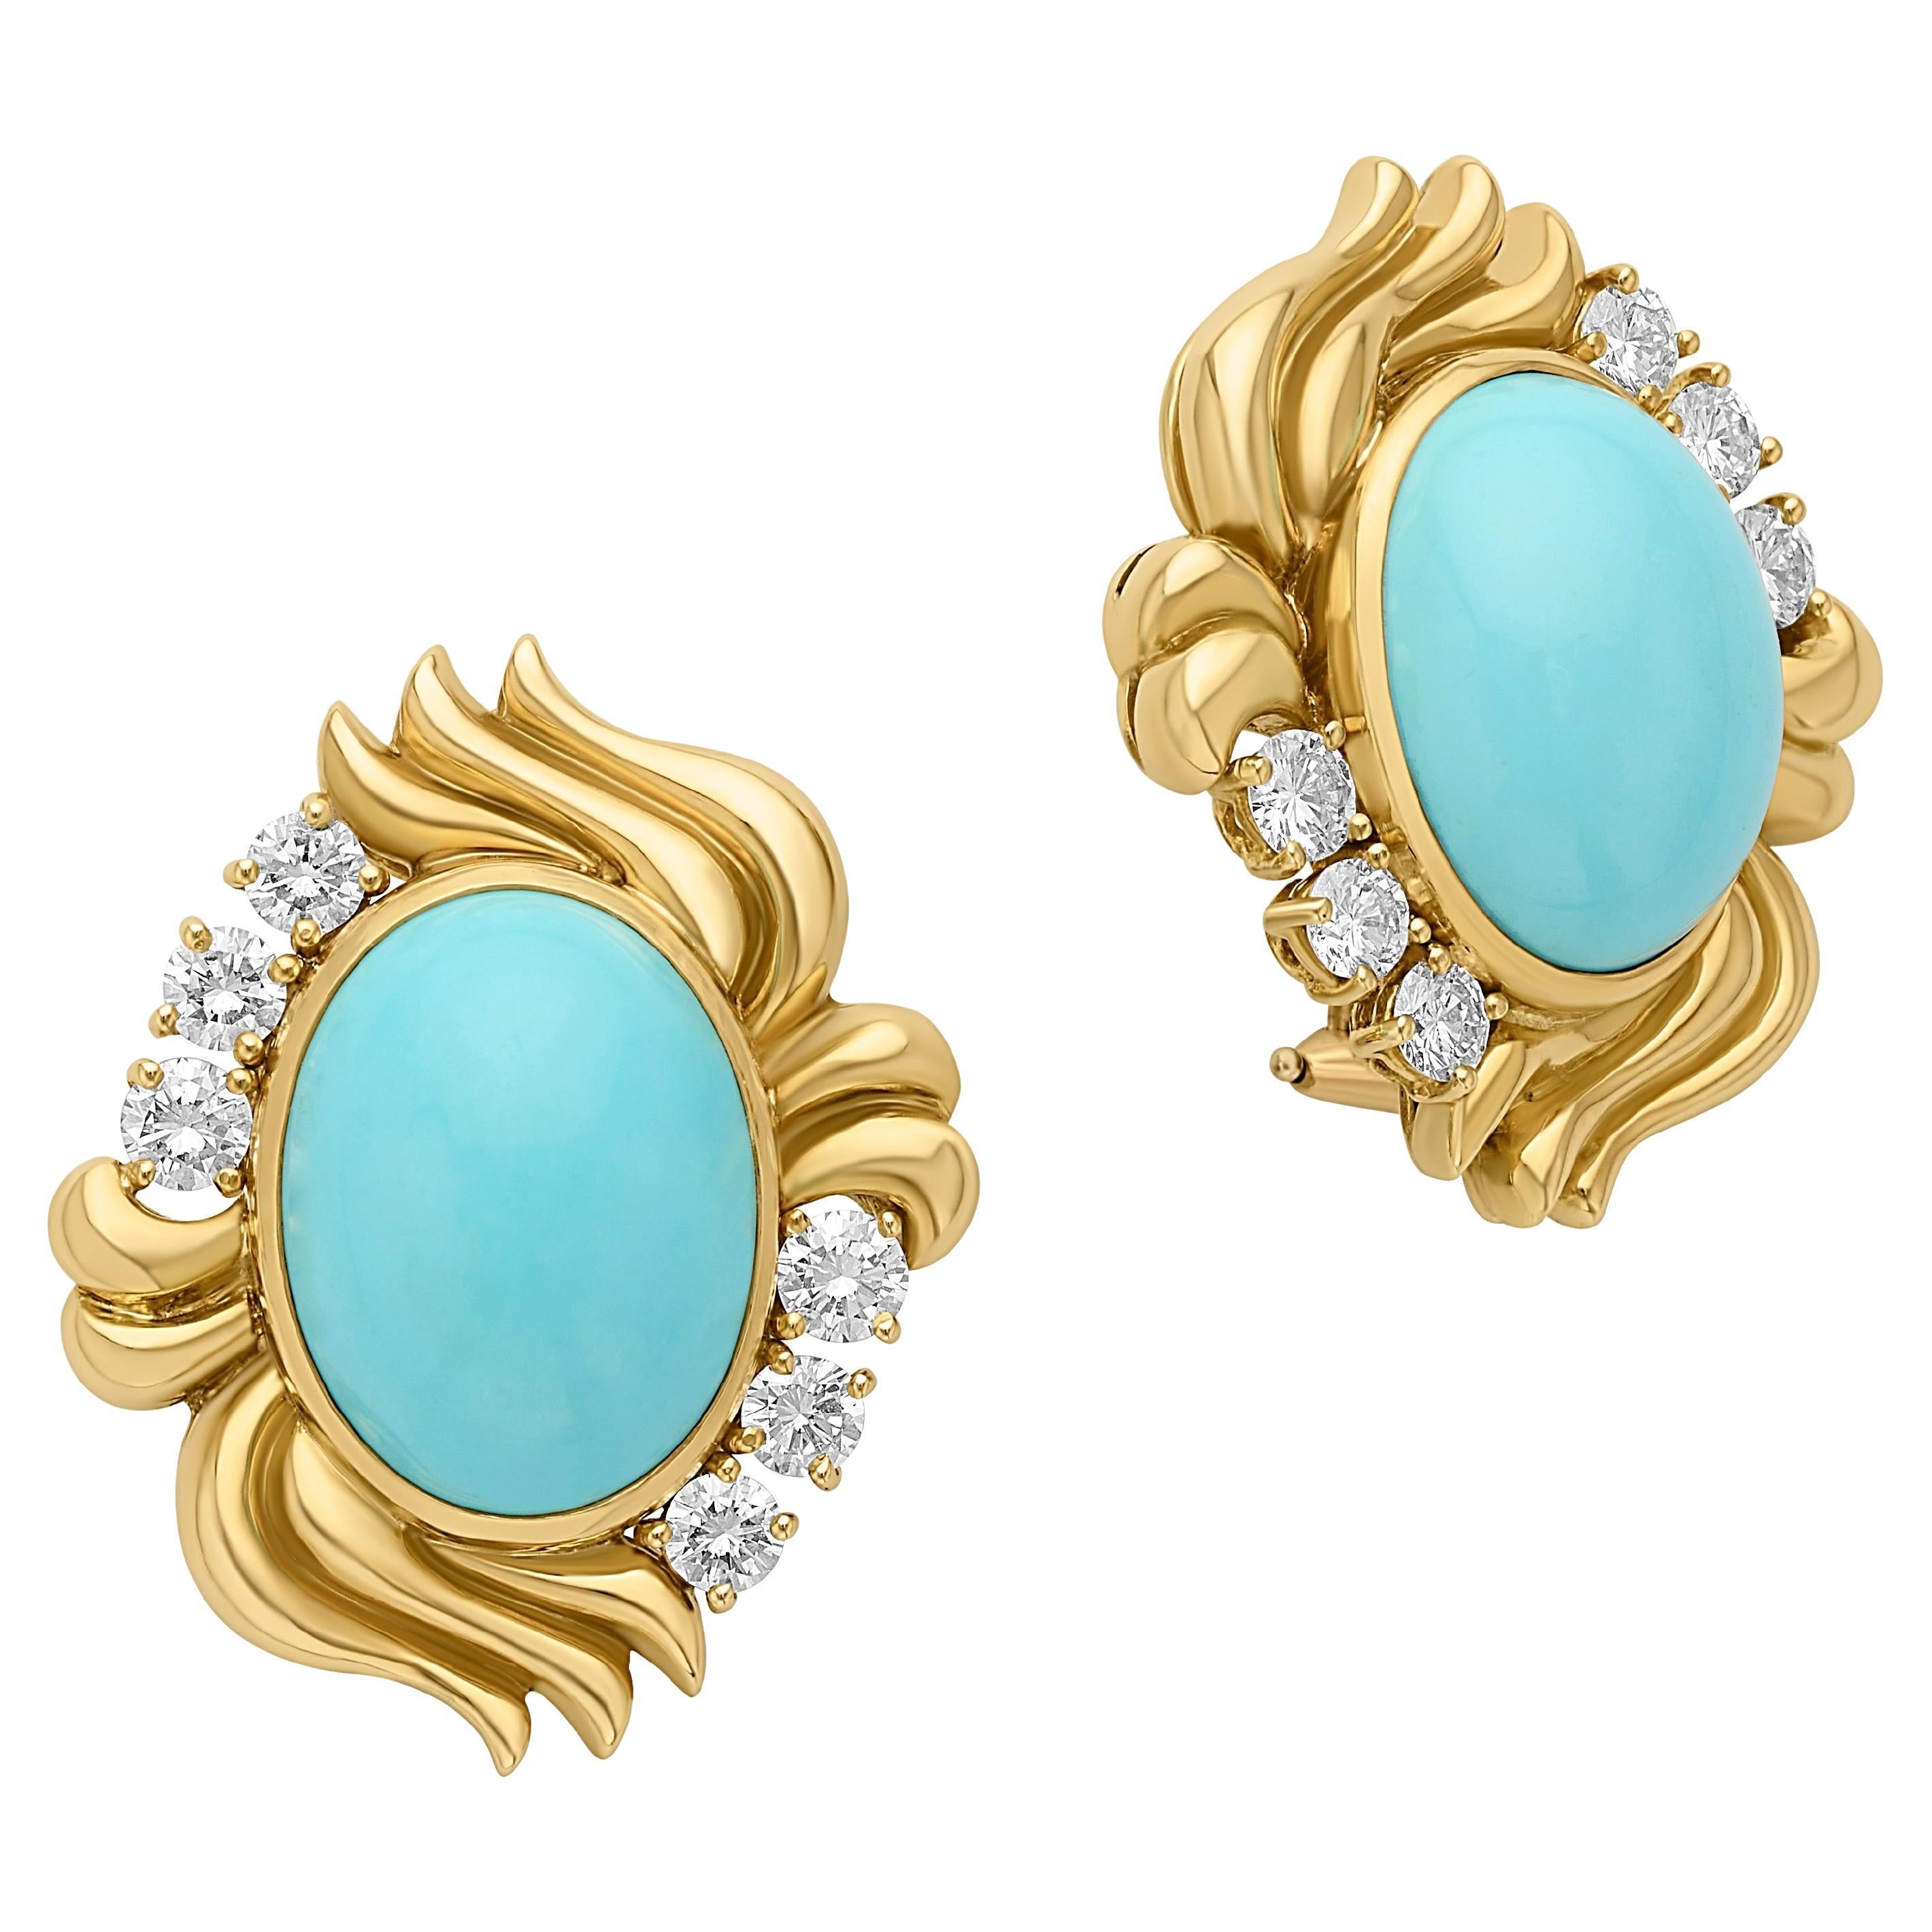 Julius Cohen 1970s 18k Yellow Gold Turquoise & Diamond Earrings